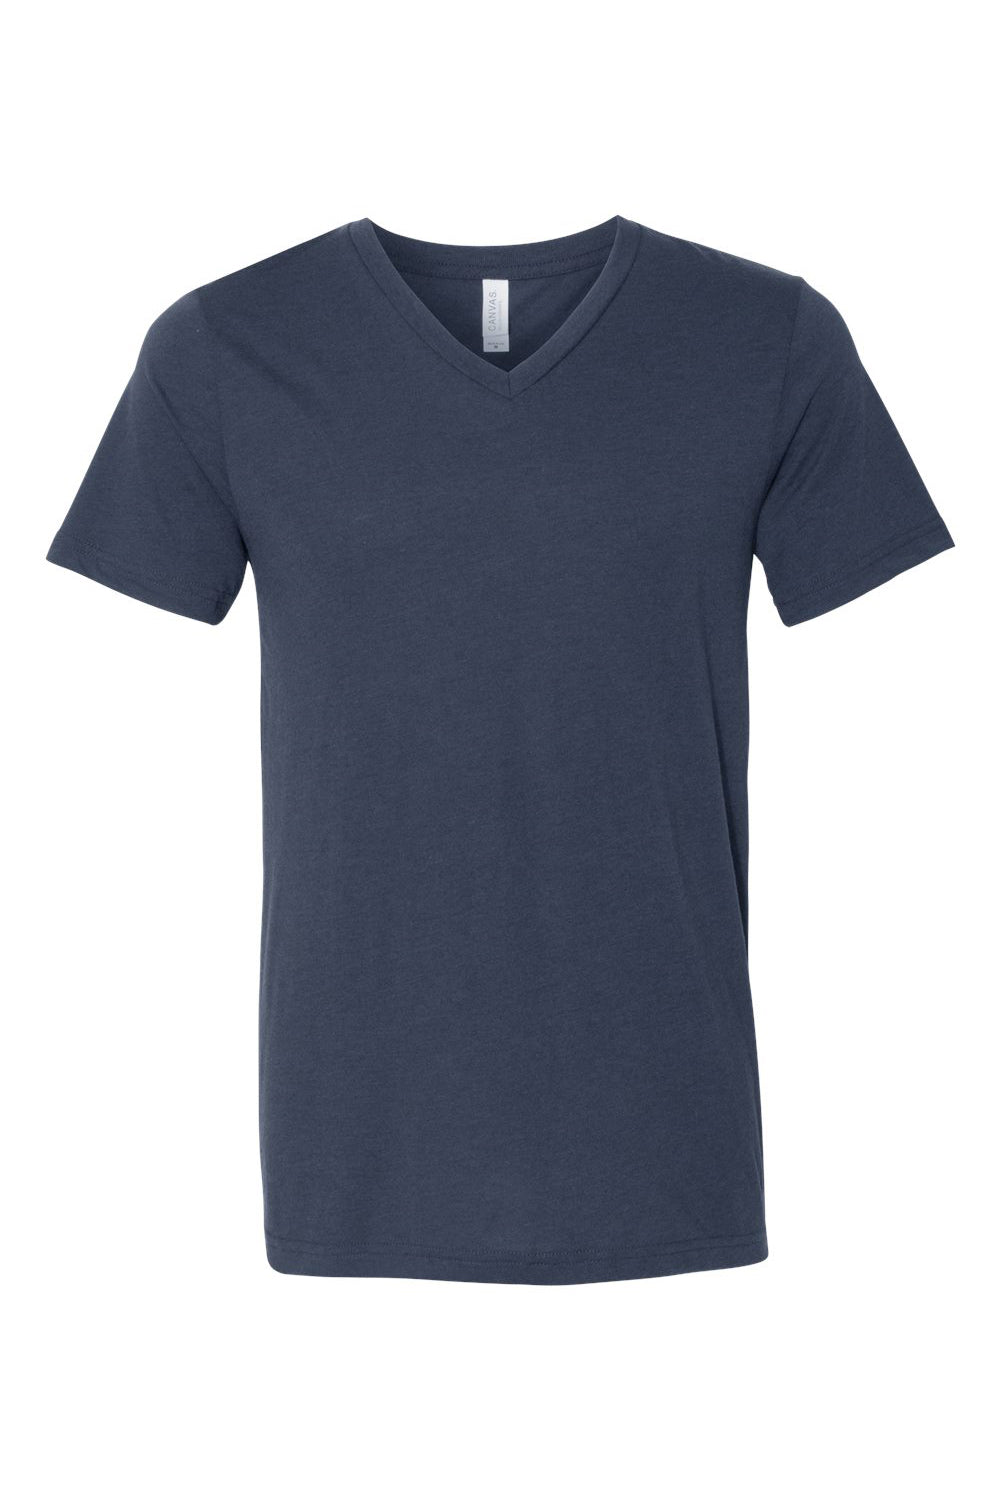 Bella + Canvas BC3415/3415C/3415 Mens Short Sleeve V-Neck T-Shirt Solid Navy Blue Flat Front